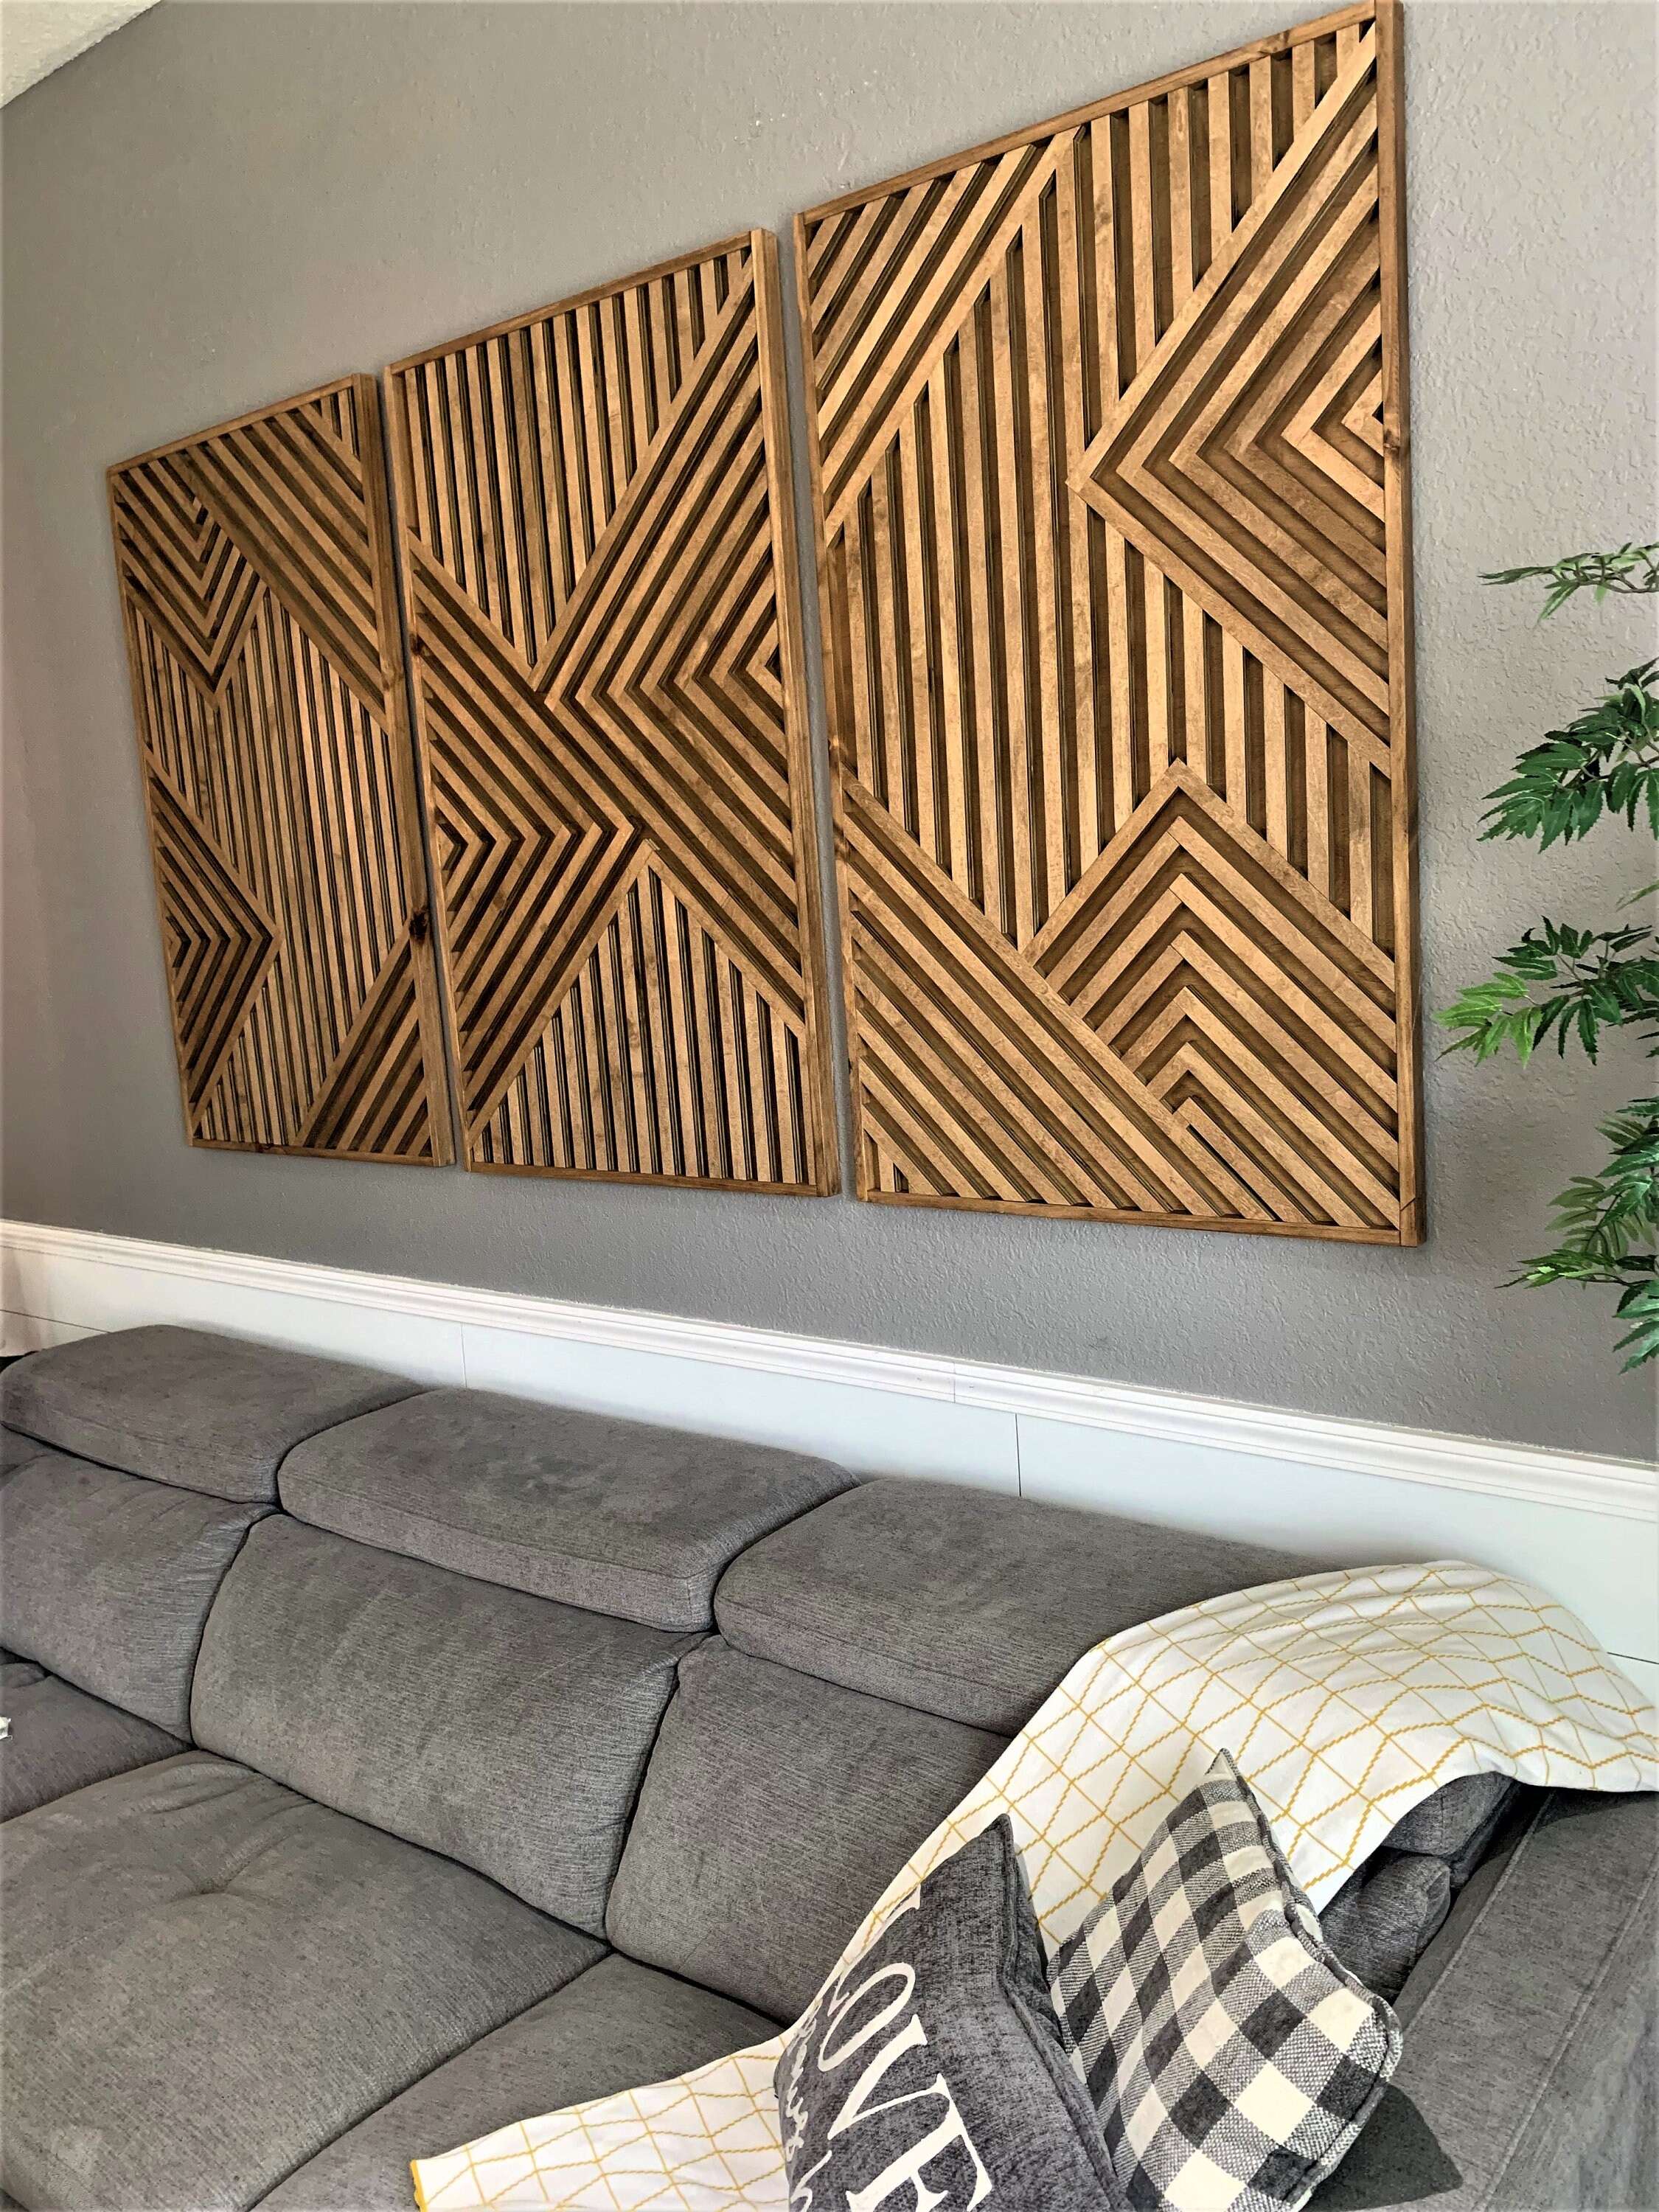 Geometric Wood Art, Geometric Wall Art, Handmade Art, Wood Slat Art, Modern  Wood Art, 3d Wall Art, Reclaimed Wood Art, Rustic Wall Art. 